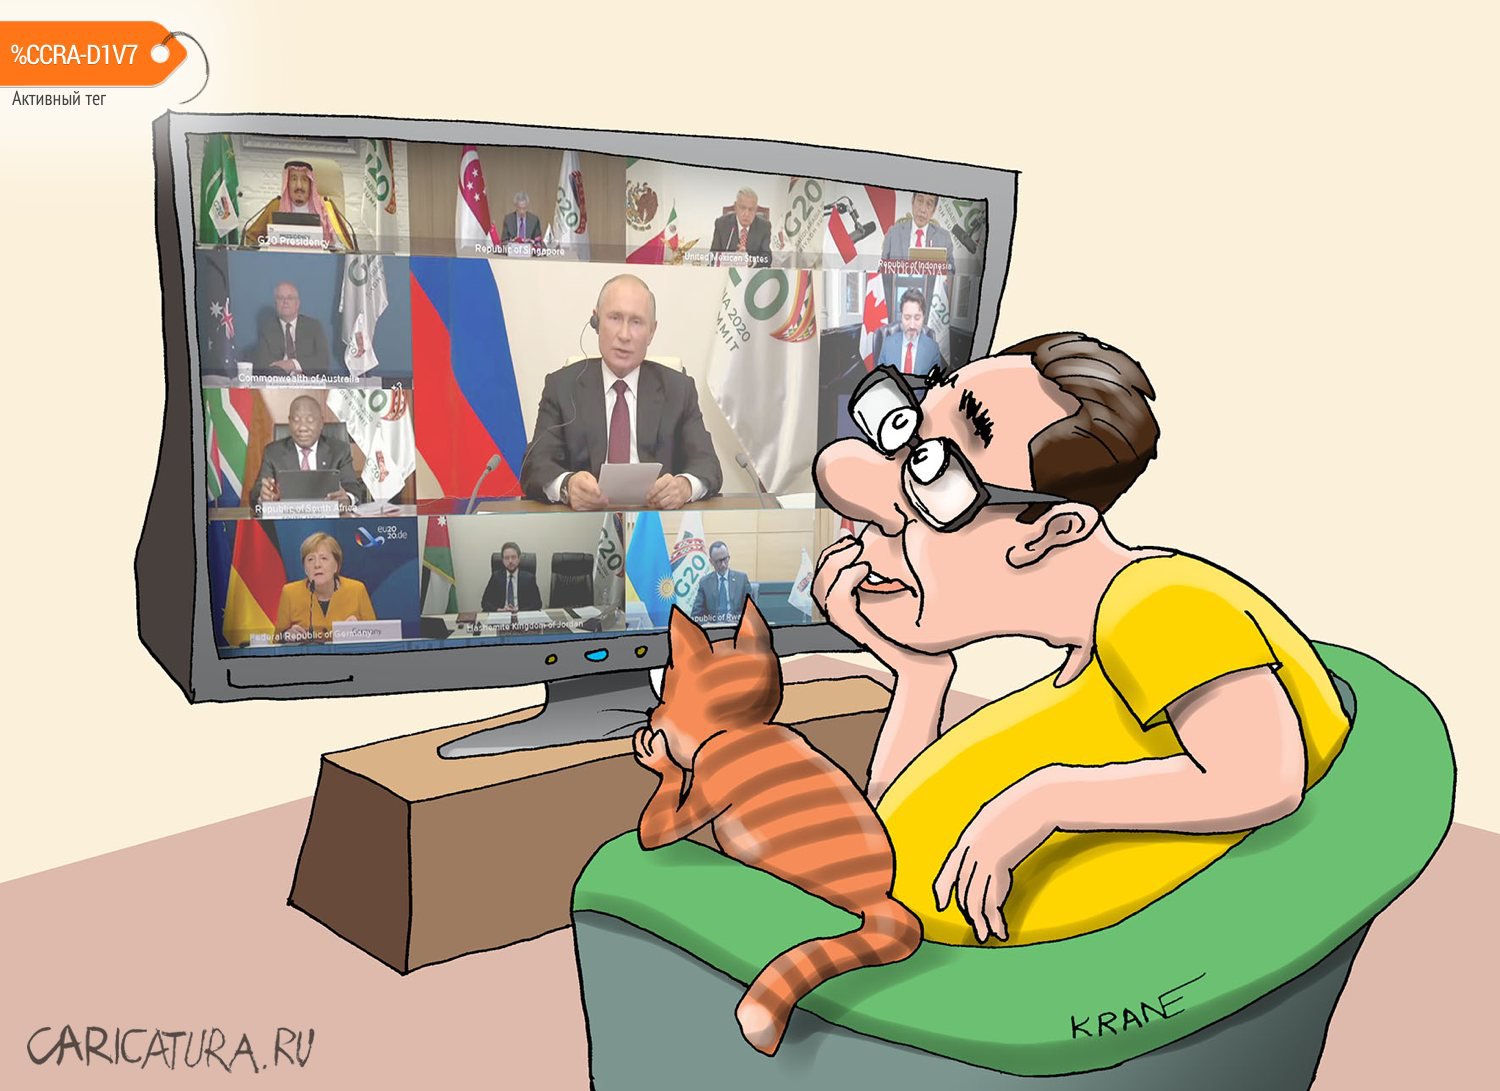 Карикатура "Благие намерения", Евгений Кран